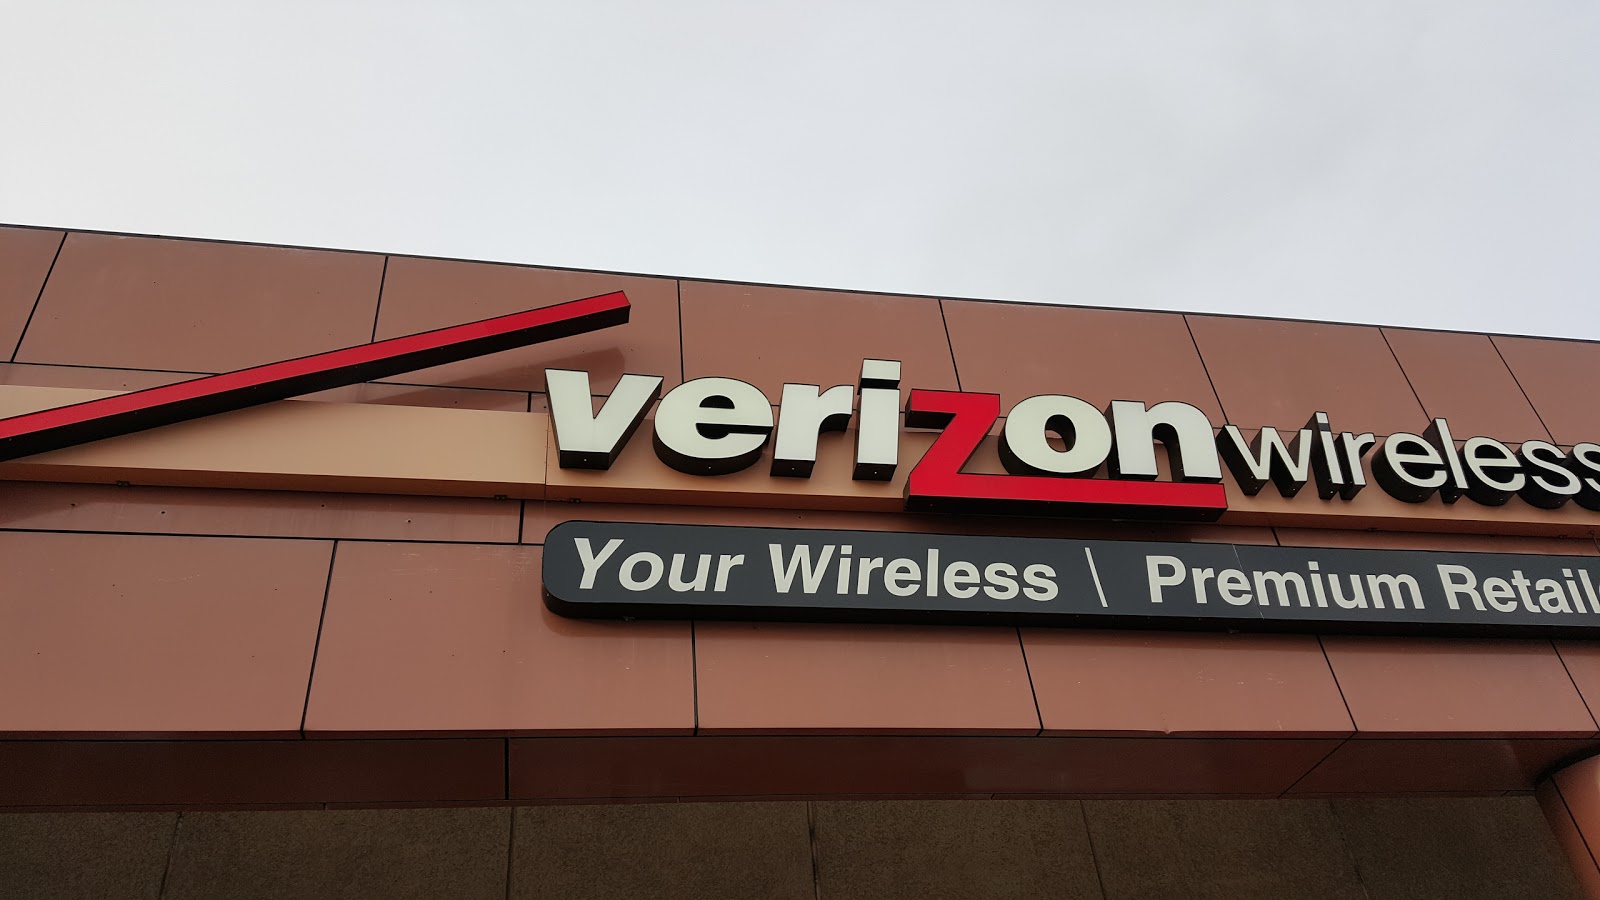 Photo of Garden City Verizon Wireless in Garden City, New York, United States - 3 Picture of Point of interest, Establishment, Store